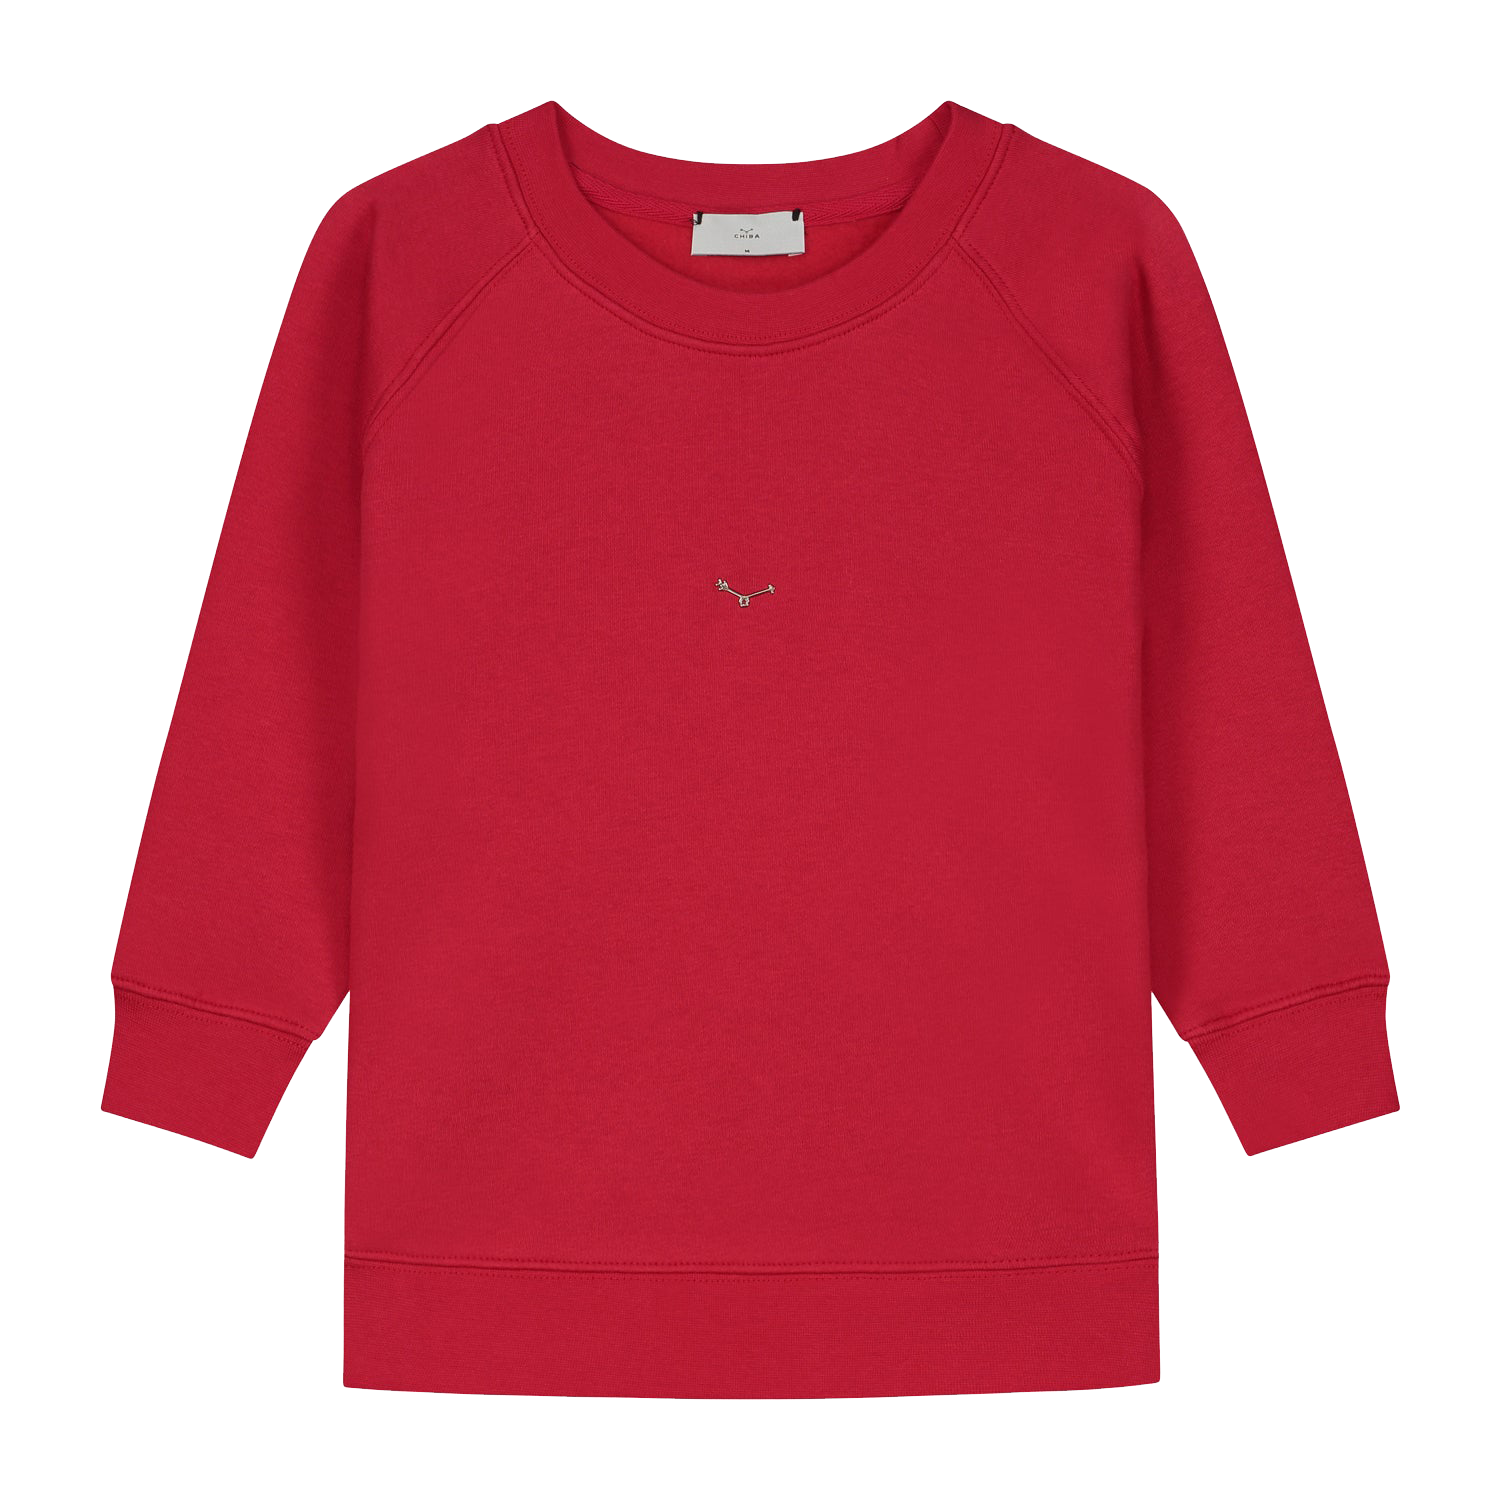 Red Sweater - Kids